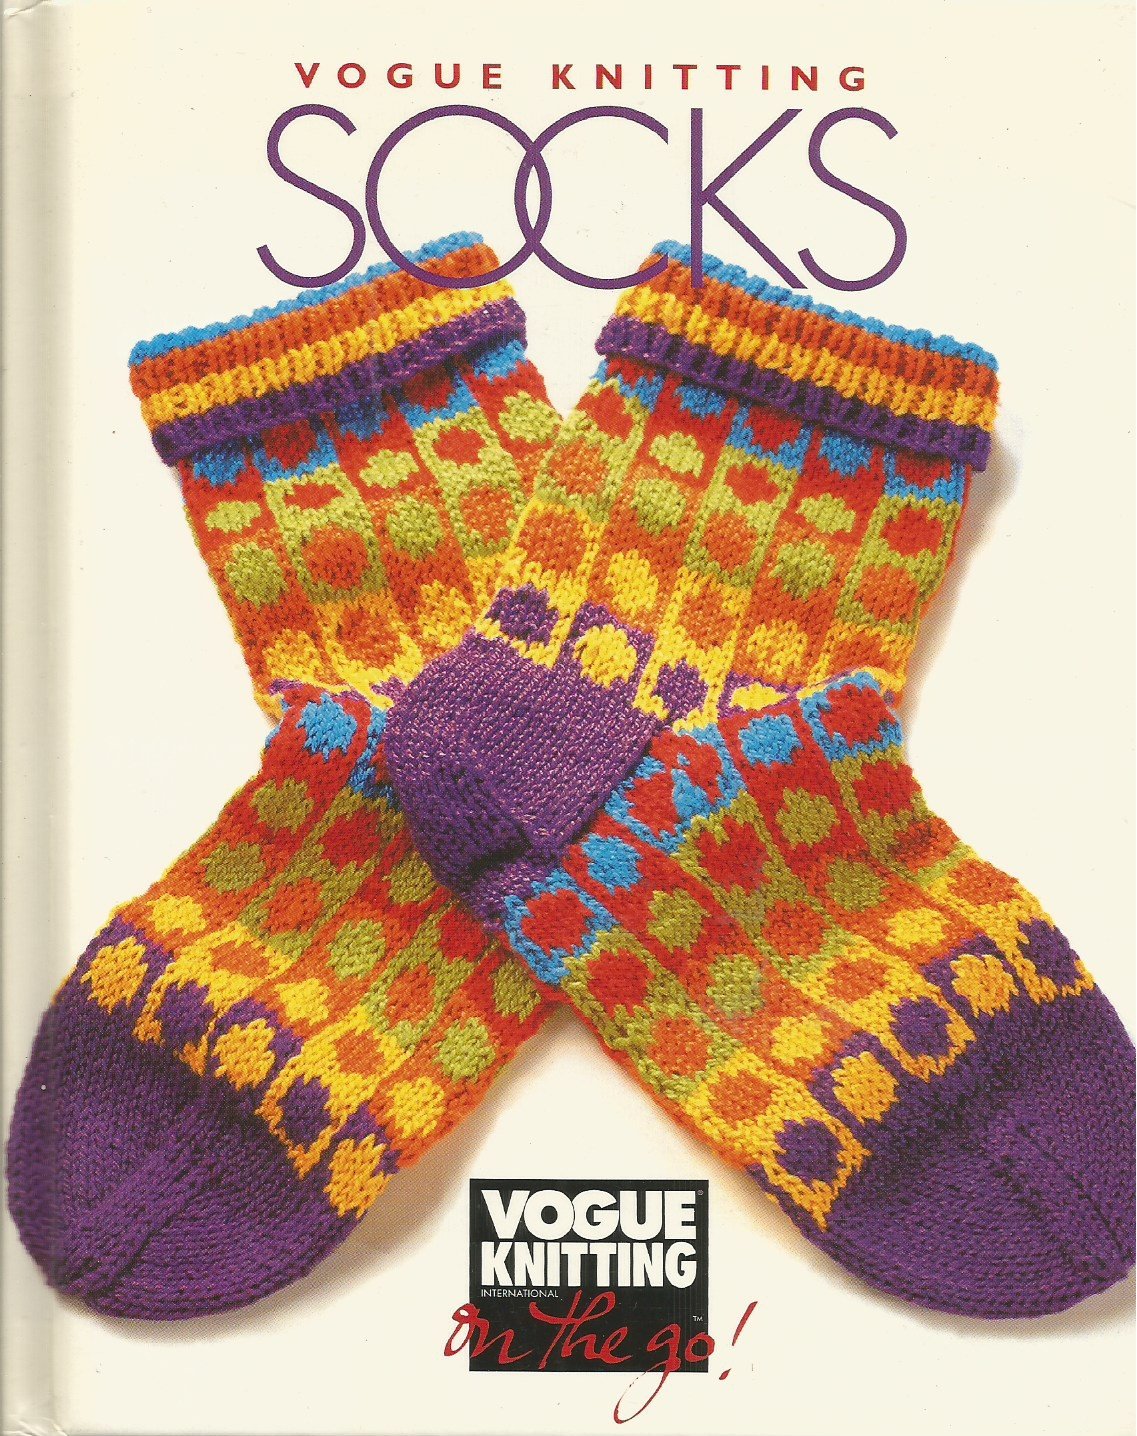 Vogue Knitting: Socks **OOP - 12.95 - *FREE Shipping